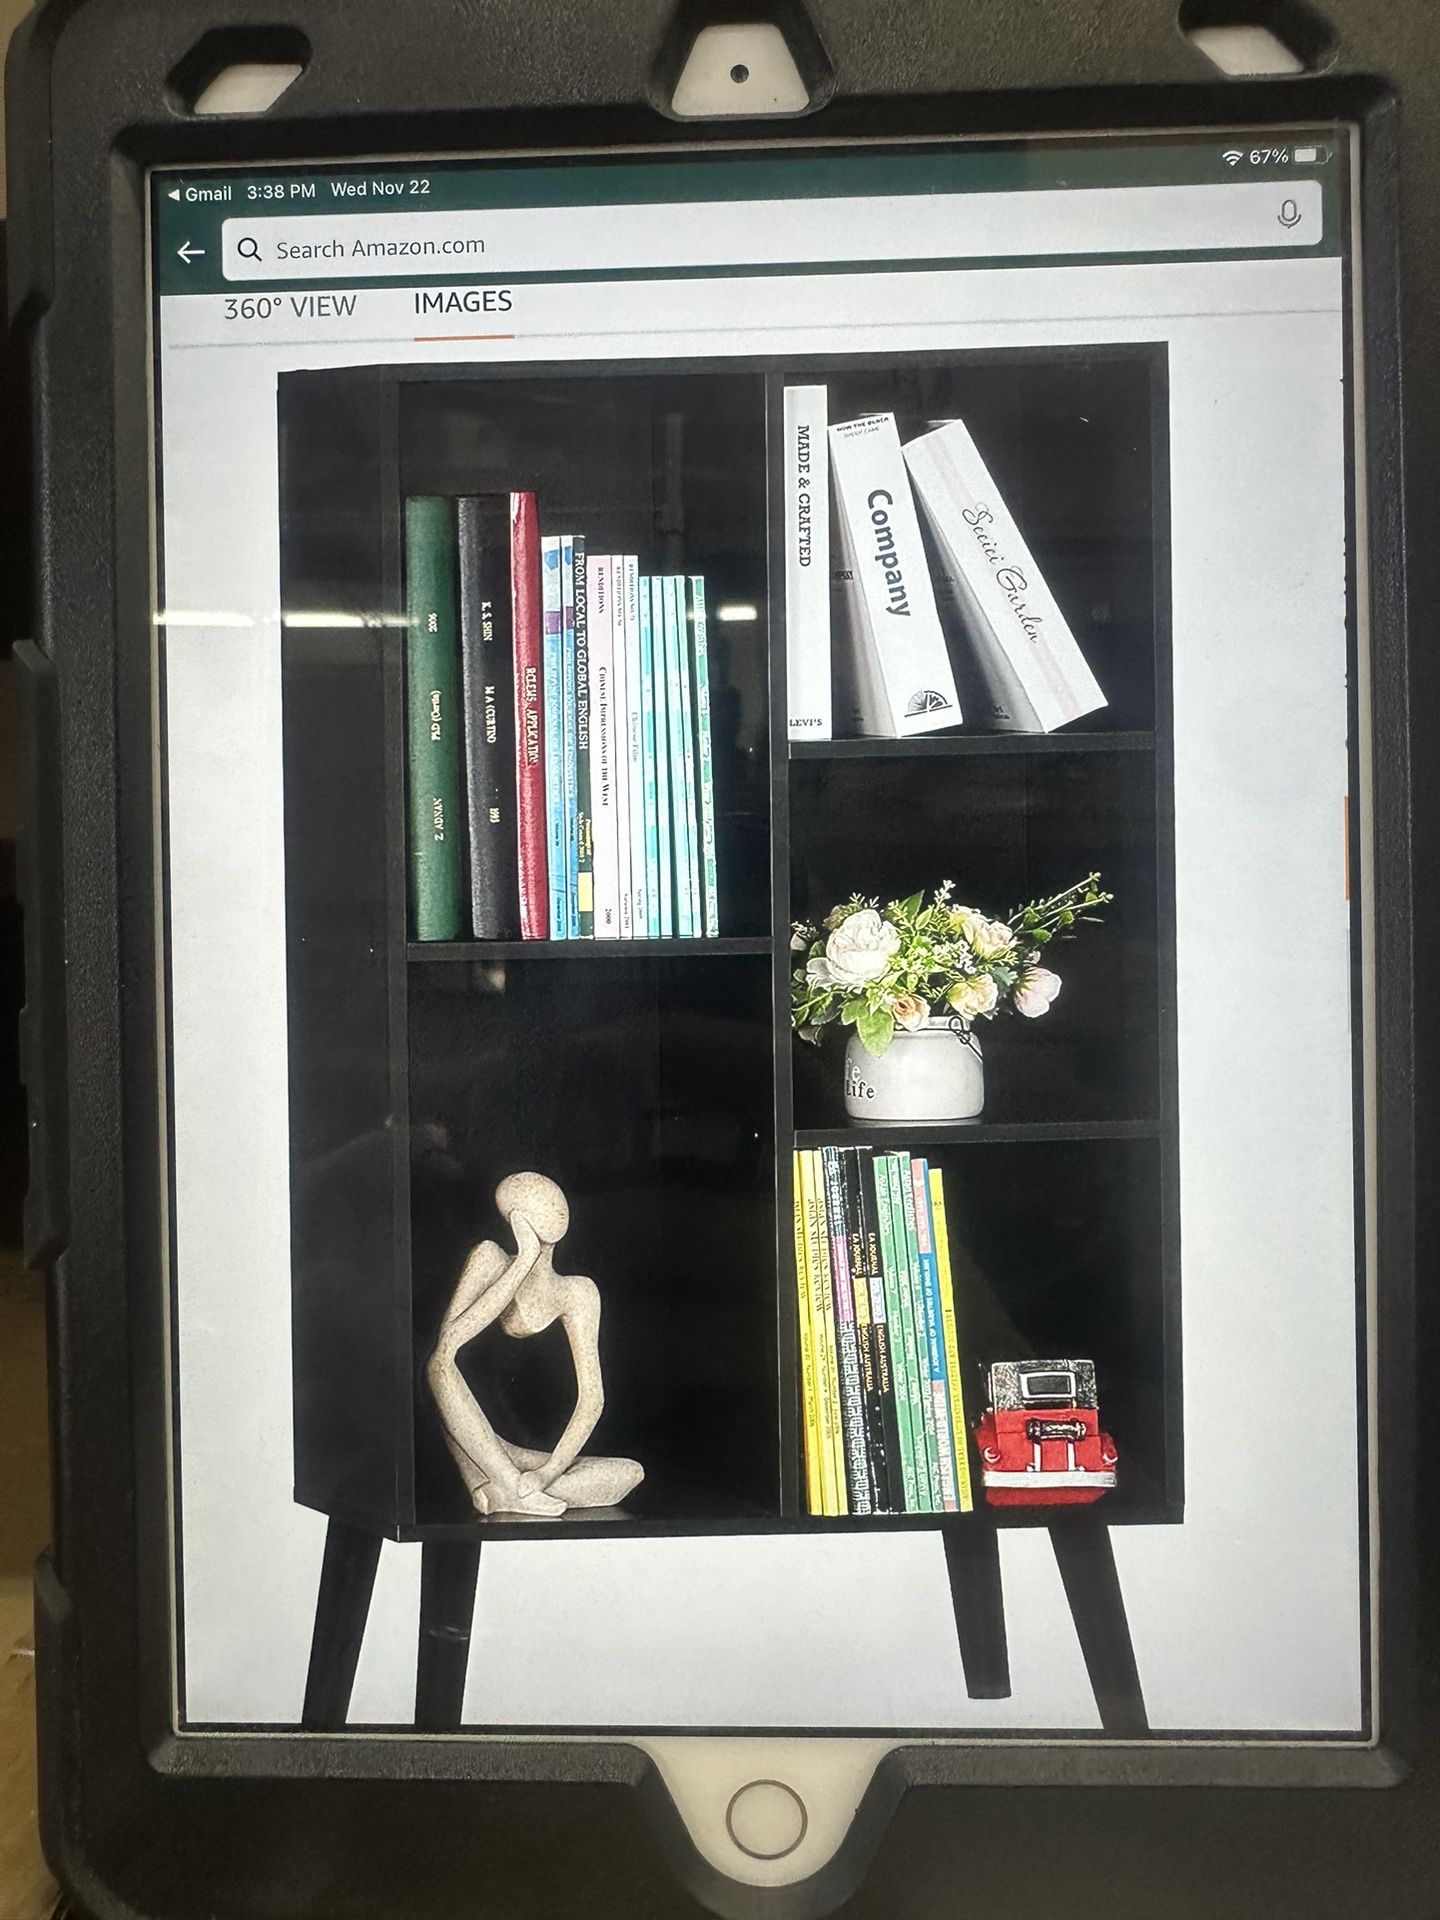 YAHARBO Small Black Narrow Bookshelf,3 Tier Modern Bookcase with Legs,Bookshelves Wood Storage Shelf,Rustic Book Shelves Cube Organizer,Display Bookca